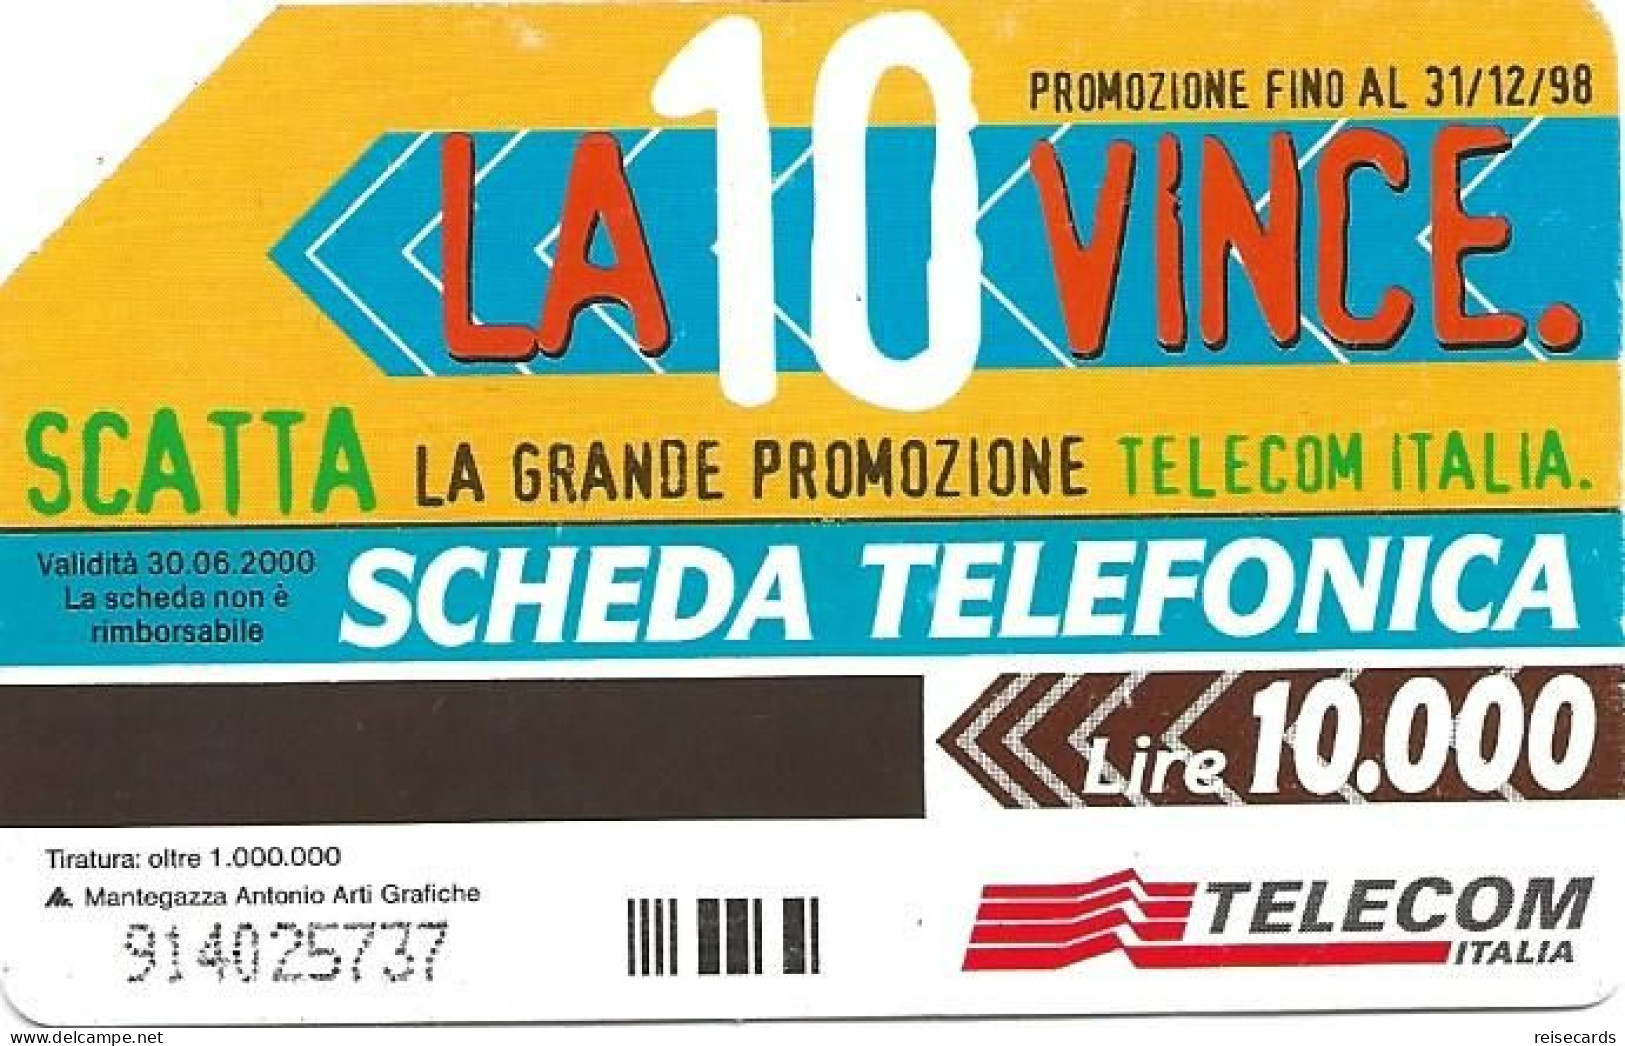 Italy: Telecom Italia - La 10 Vince - Publiques Publicitaires